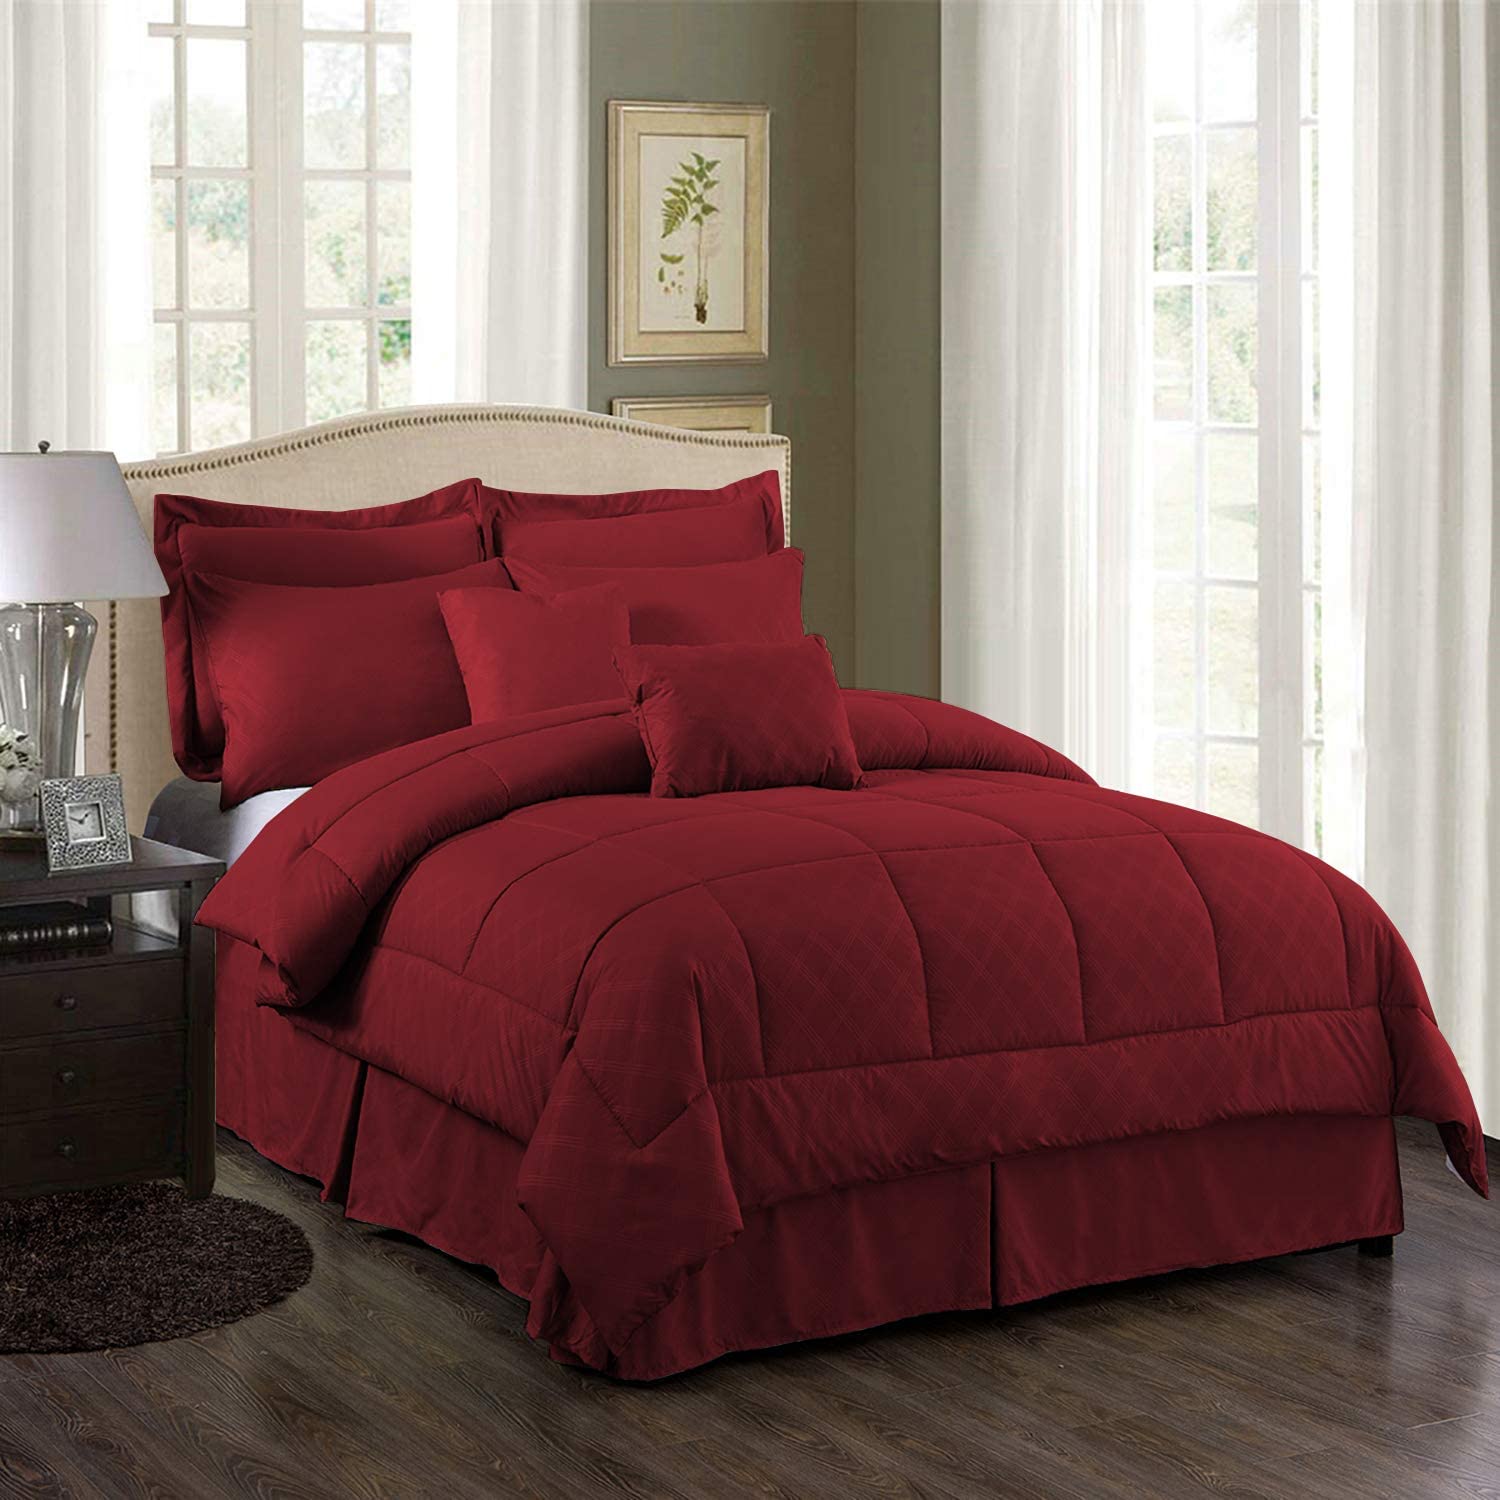  California King Comforter Set Brown Ragdoll Lightweight  Microfiber Bedding Sets 3 Pieces for Kids Teens Adults - 1 x Duvet Cover  104x98 + 2 x Pillowcases 20x36 : Home & Kitchen